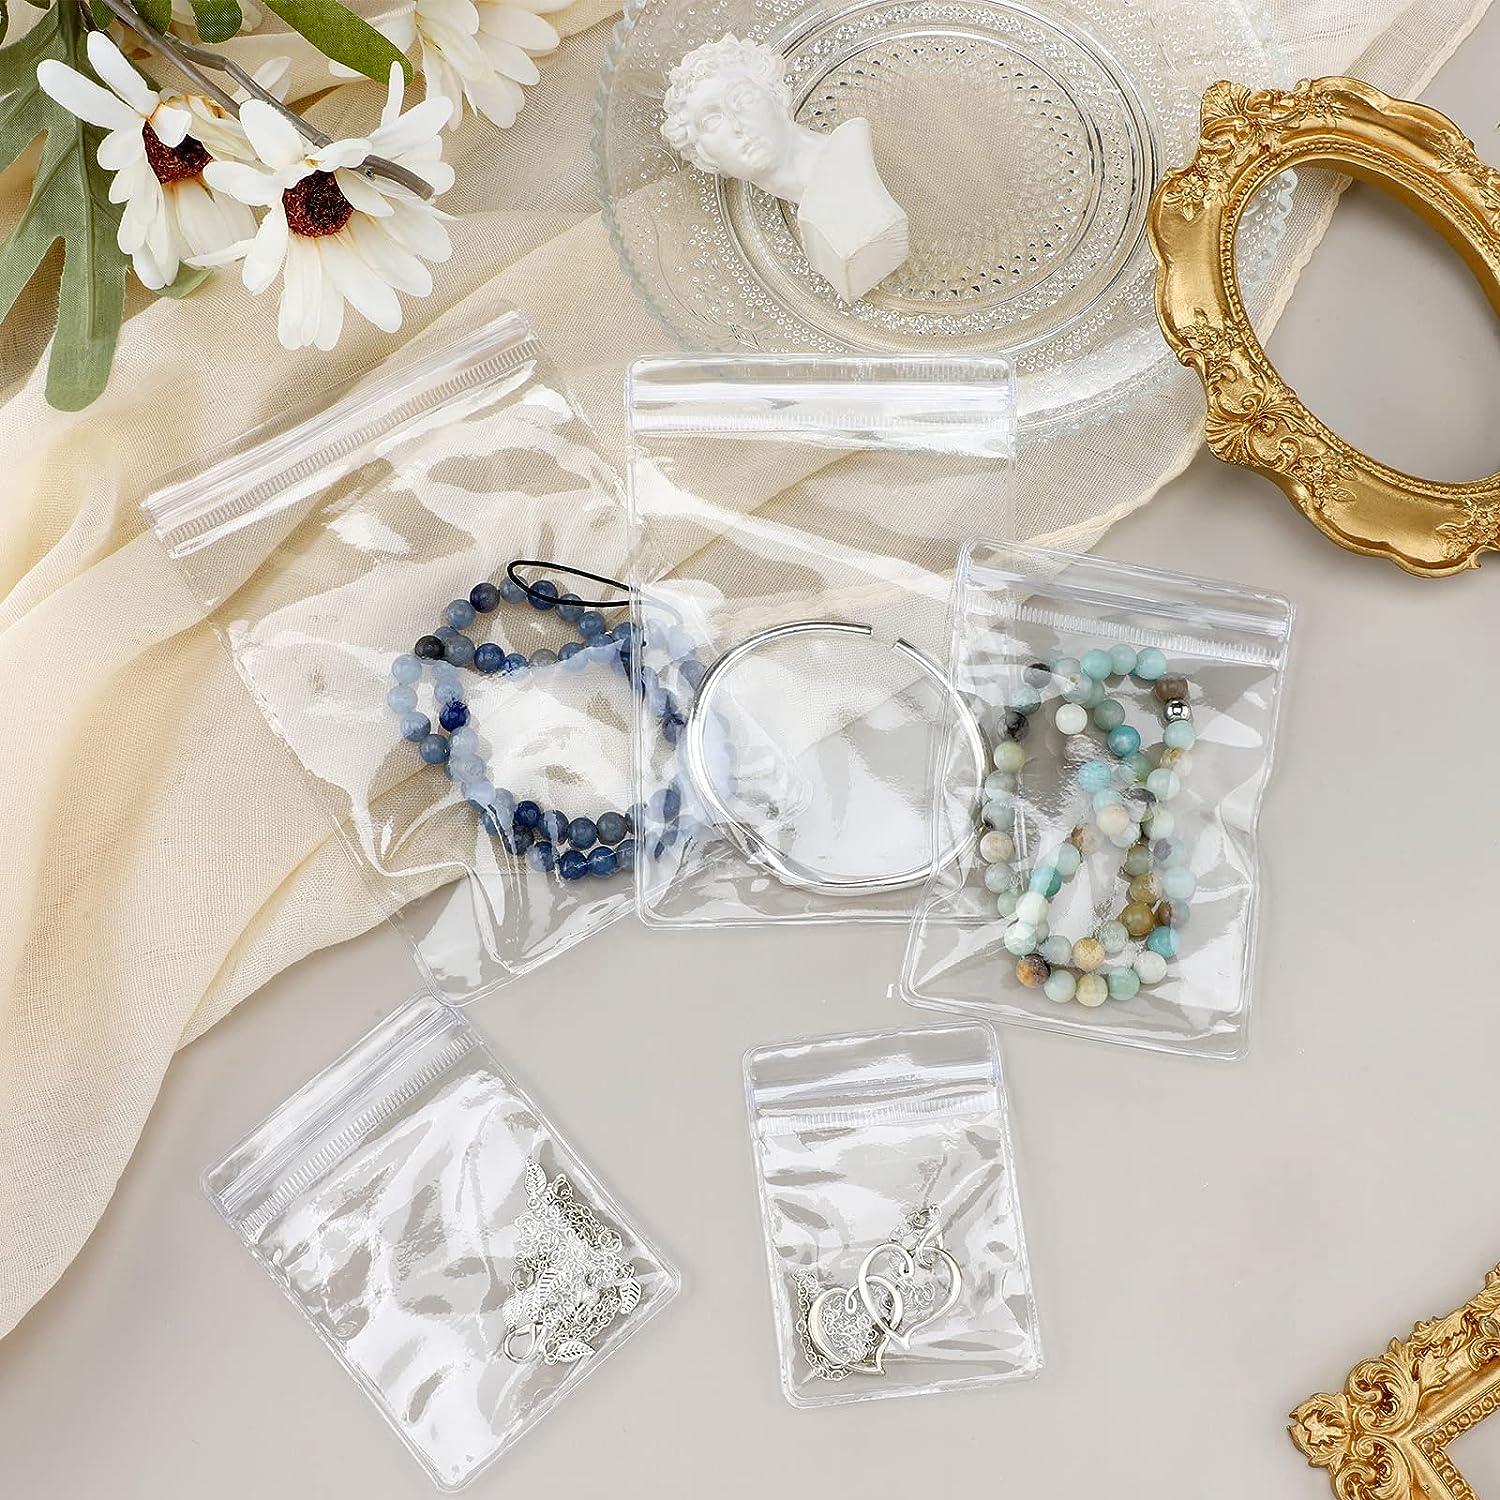  Clear Plastic Jewelry Zip Bags, 10PCS Self Seal